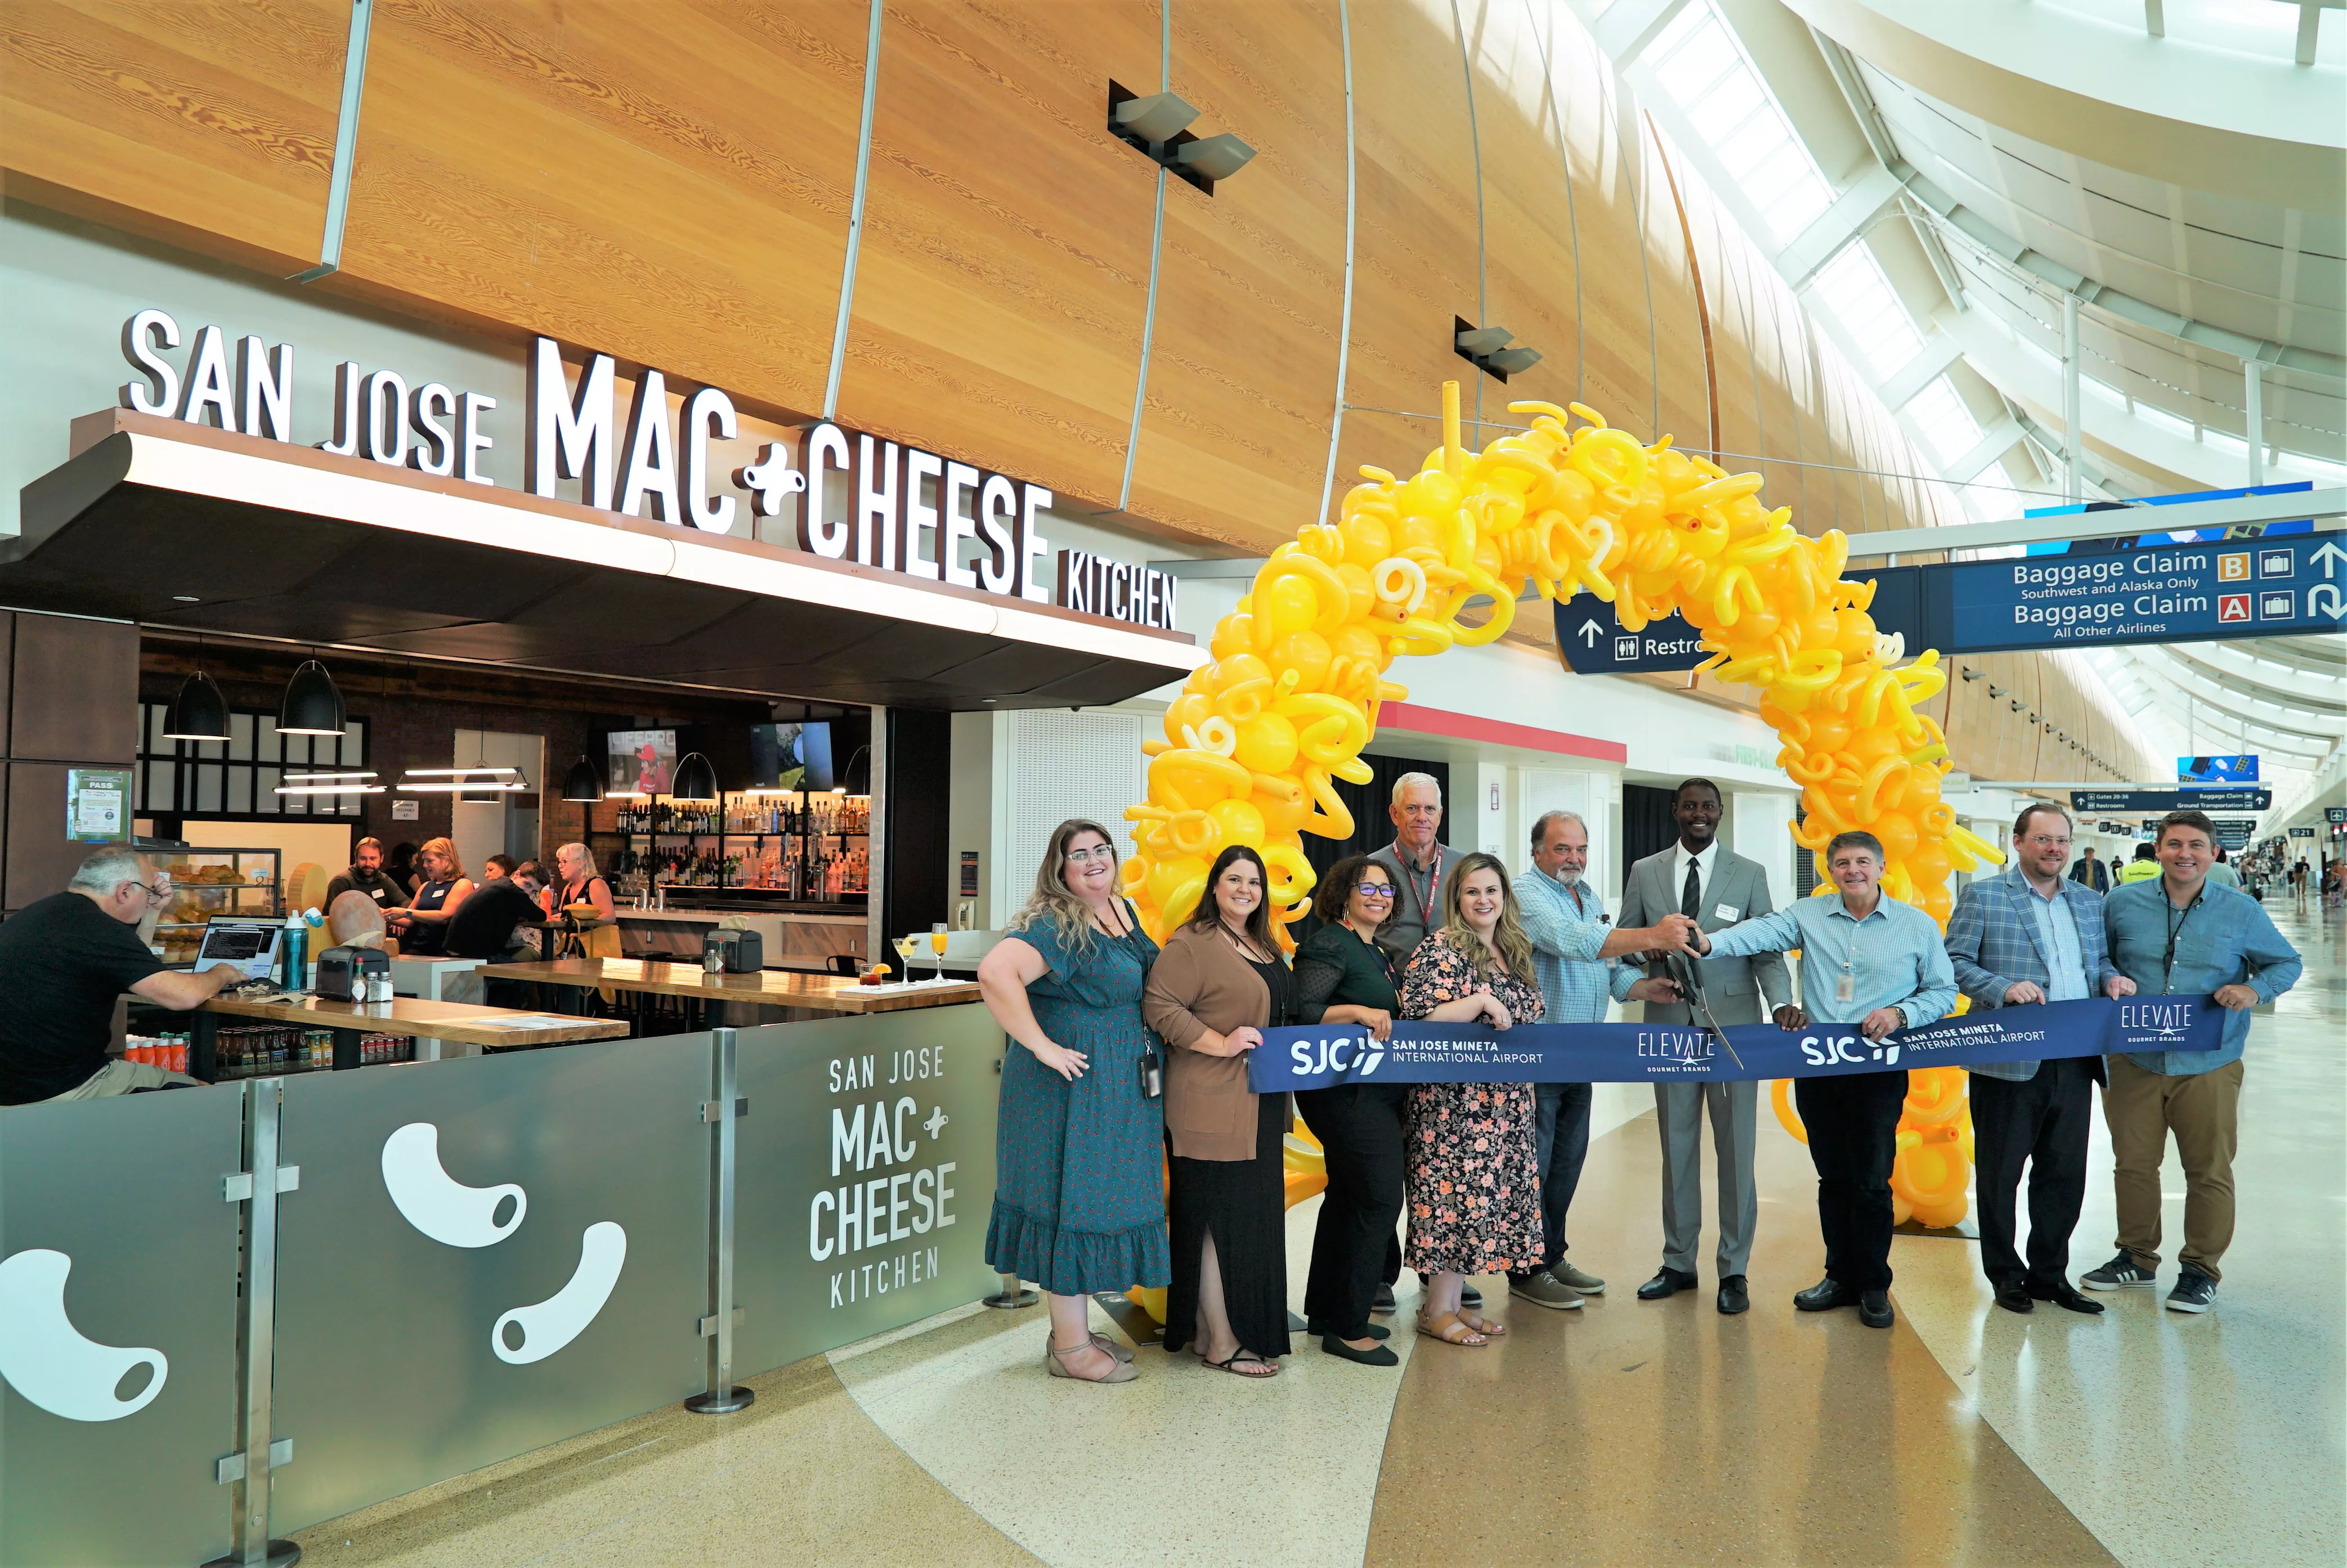 Mac + Cheese Grand Opening Celebration